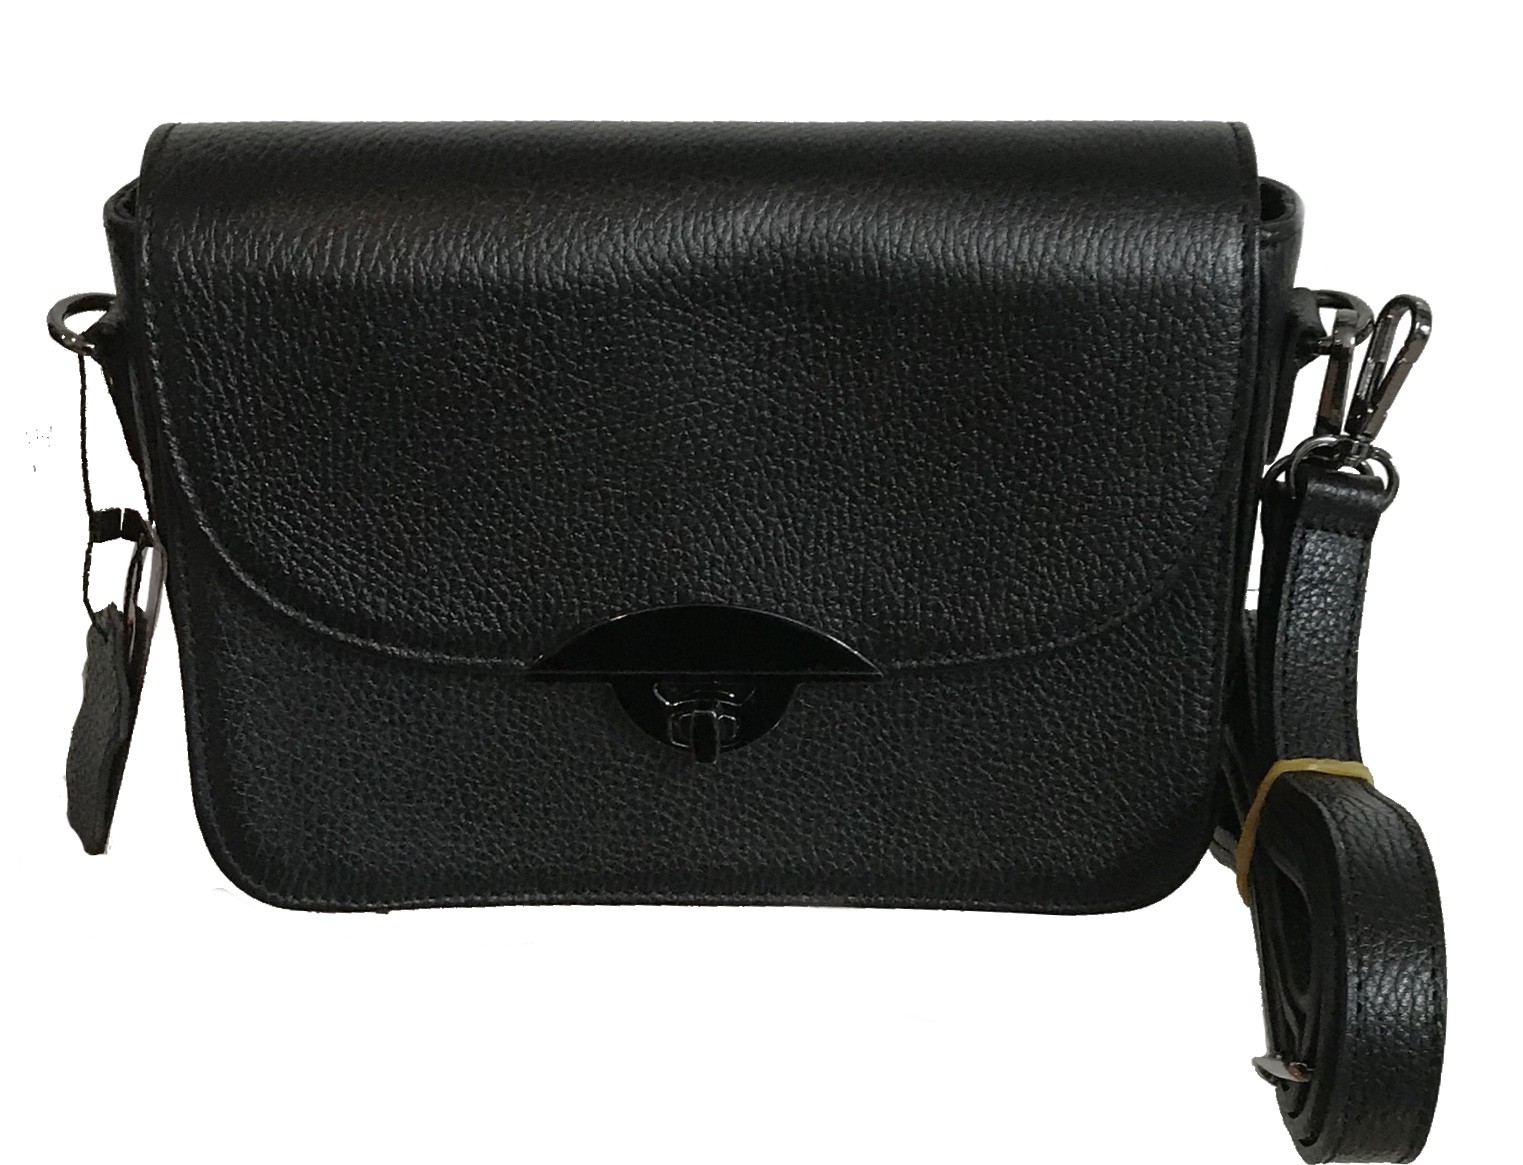 Women’s genuine leather handbag with strap black